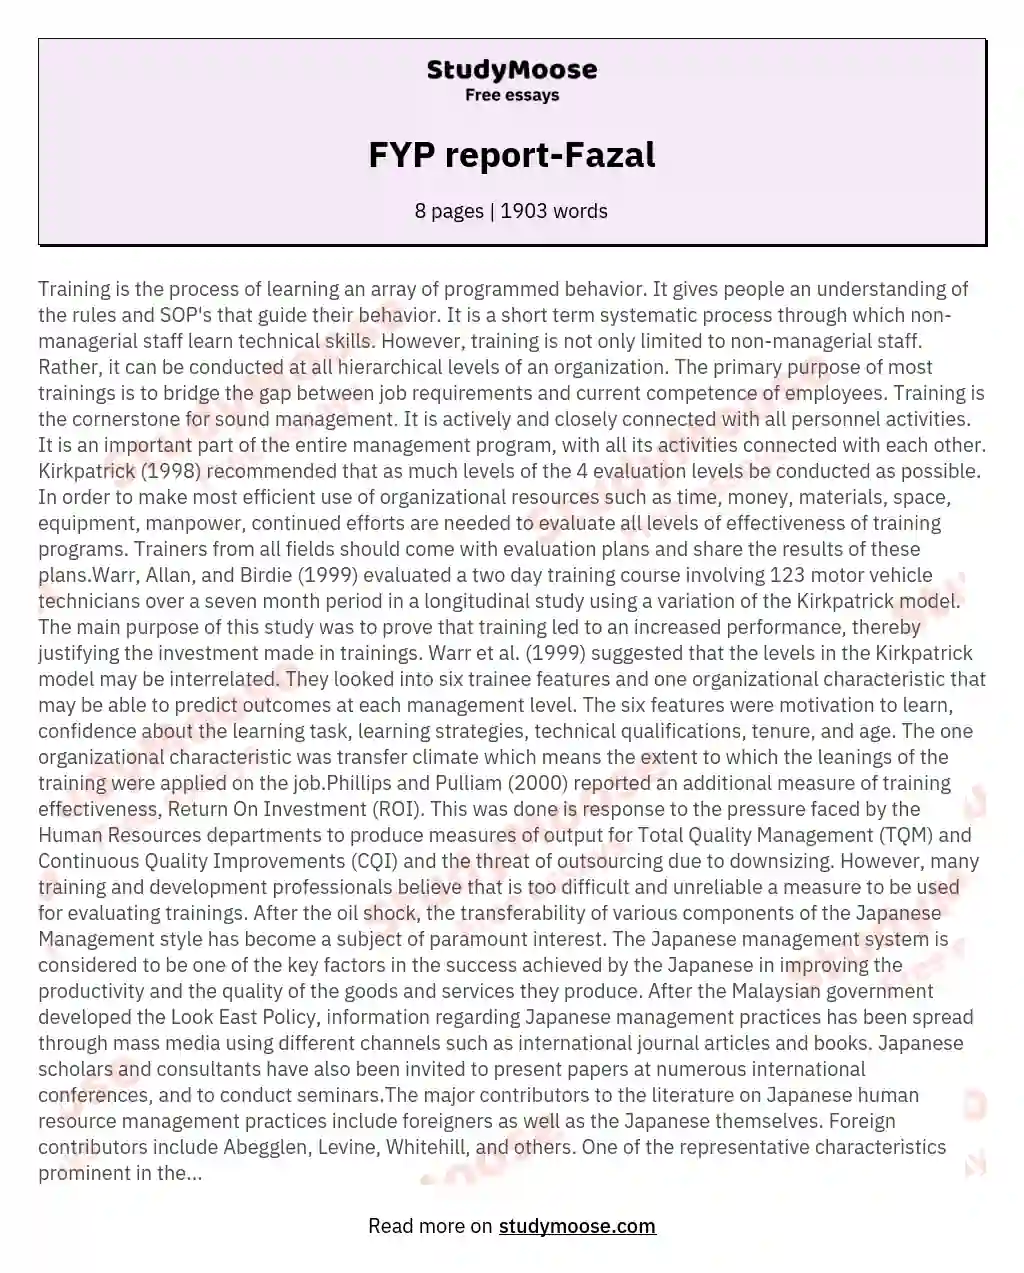 FYP report-Fazal essay